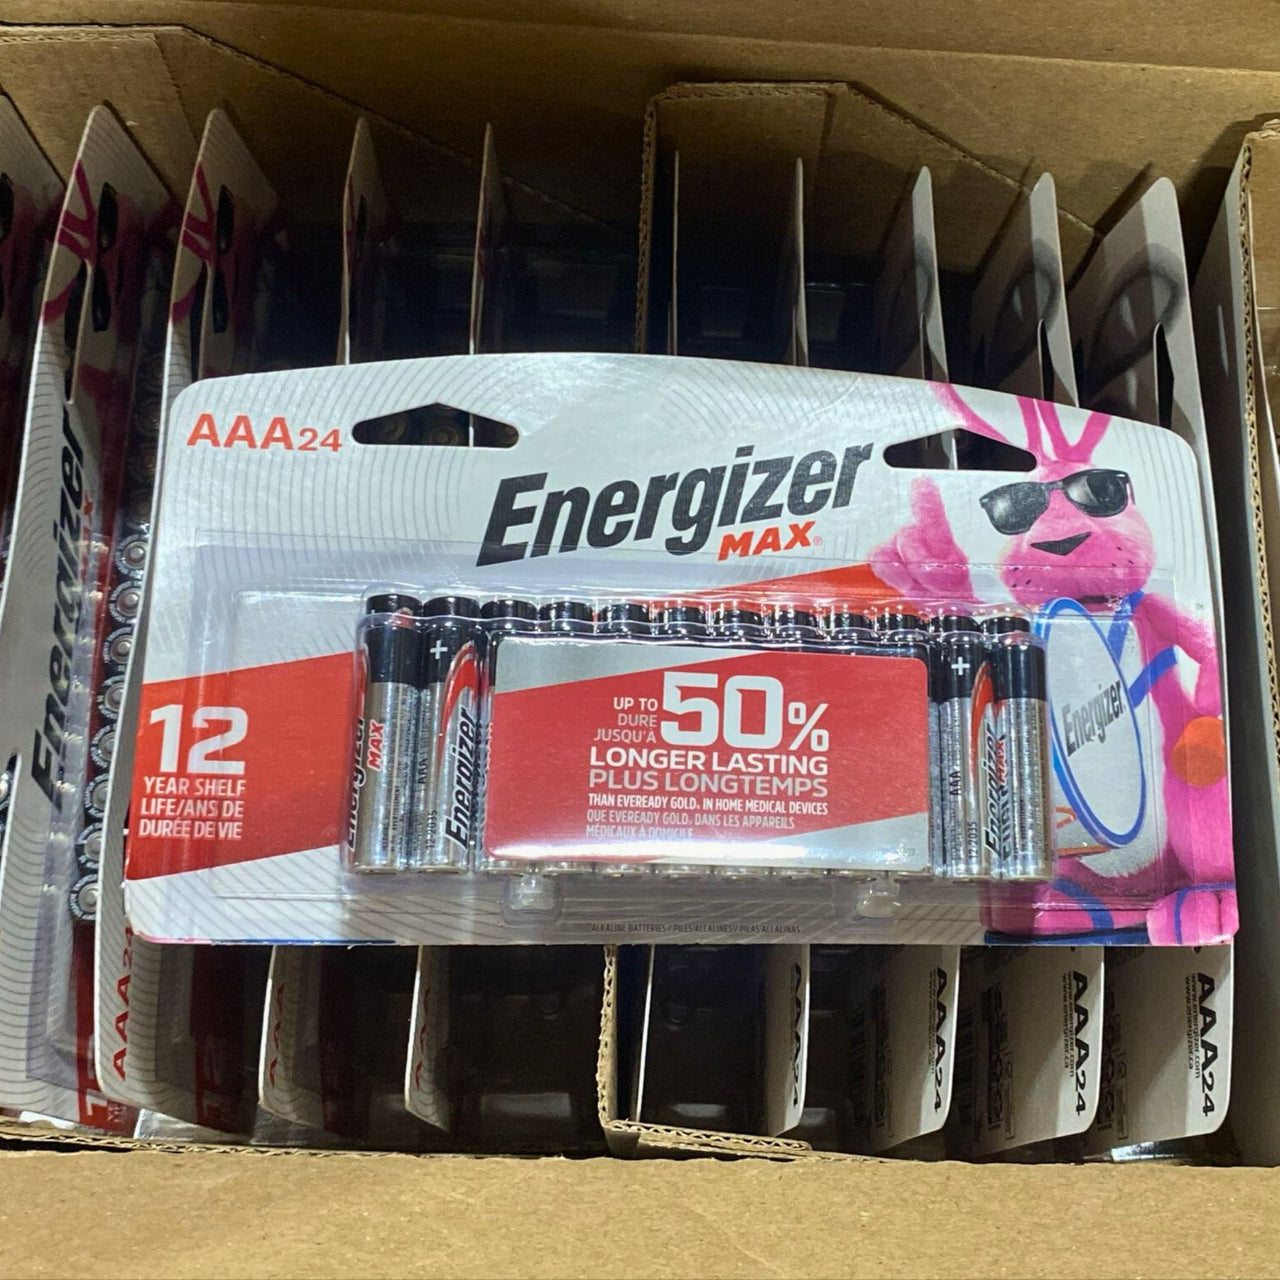 Energizer Max AAA24 Batteries